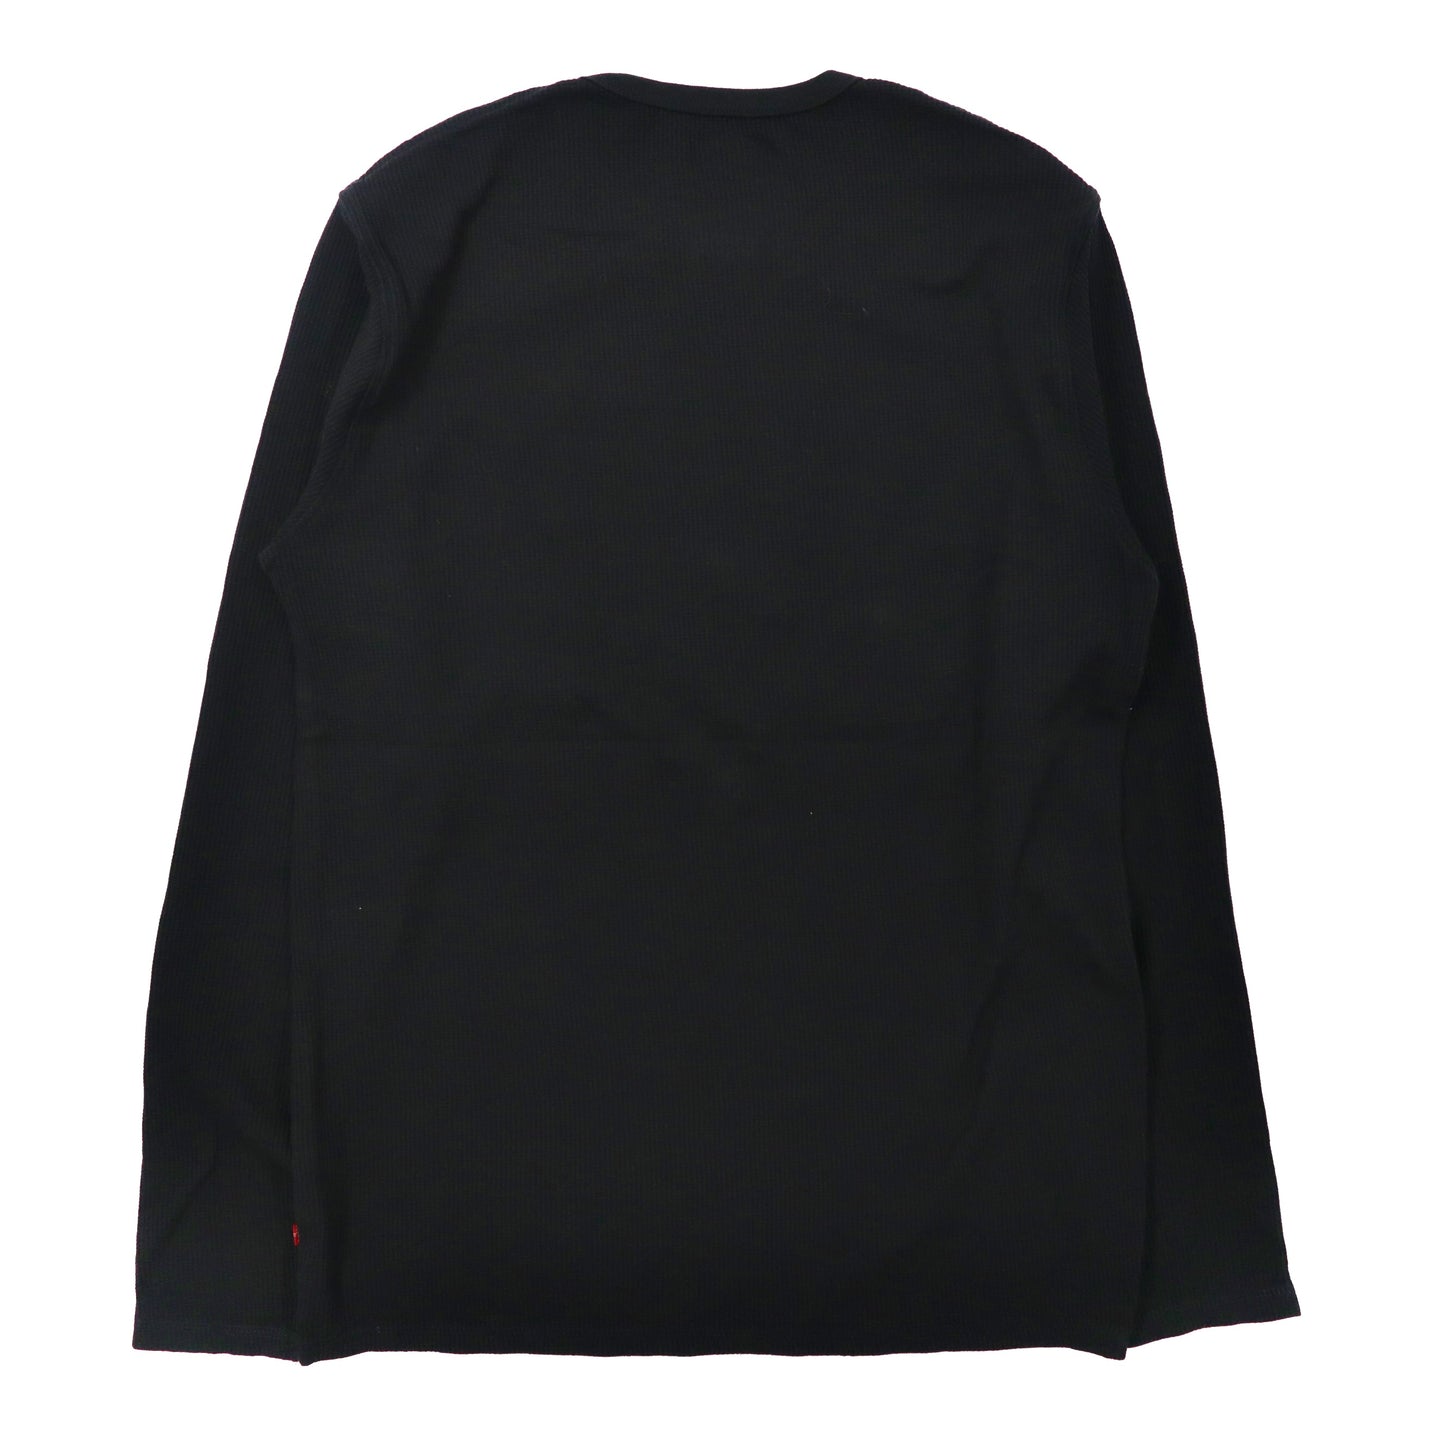 Levi's サーマルロングスリーブTシャツ L ブラック コットン フロントロゴプリント